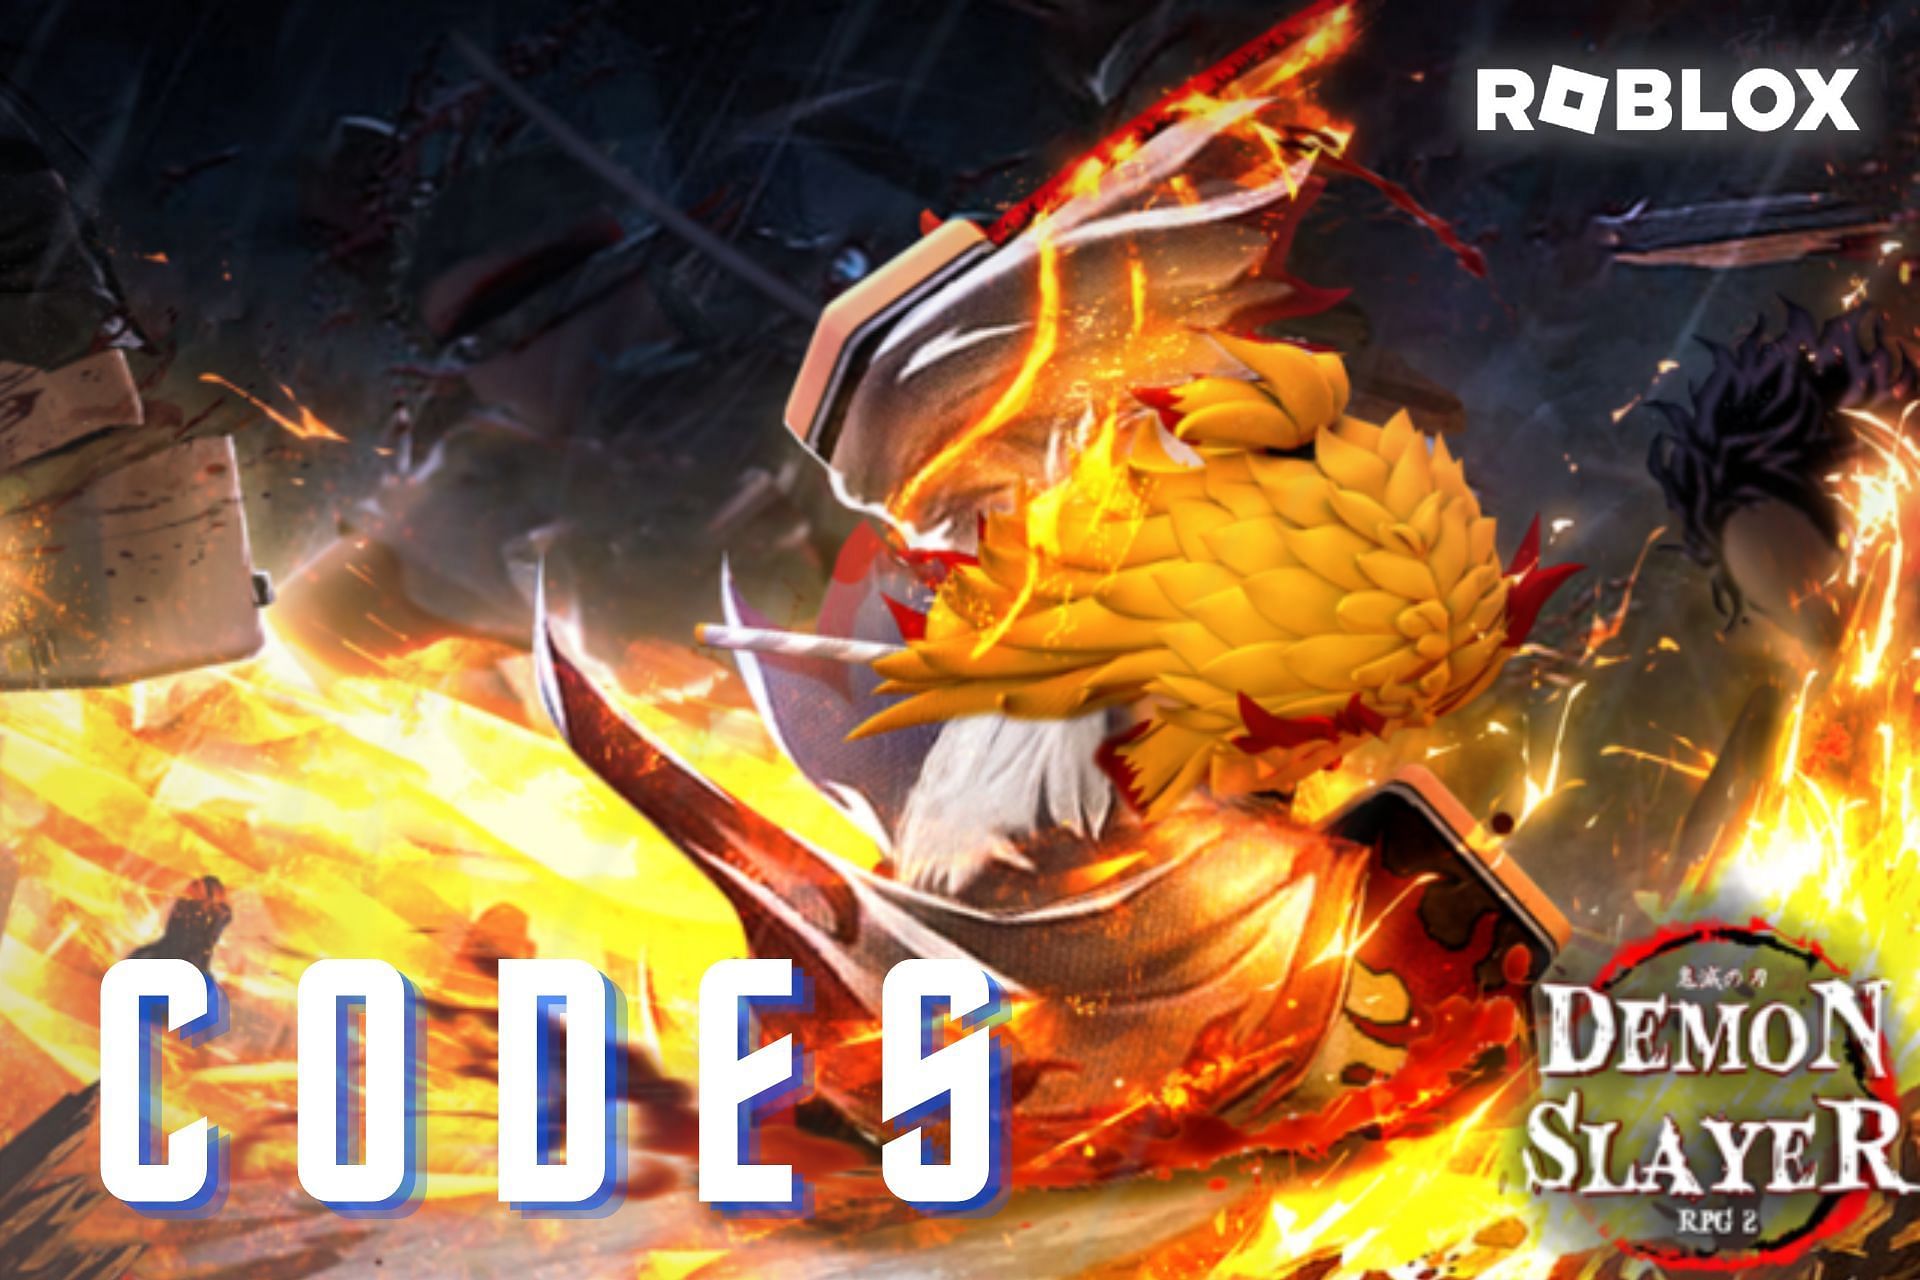 ALL Demon Slayer RPG 2 CODES  Roblox Demon Slayer RPG 2 Codes